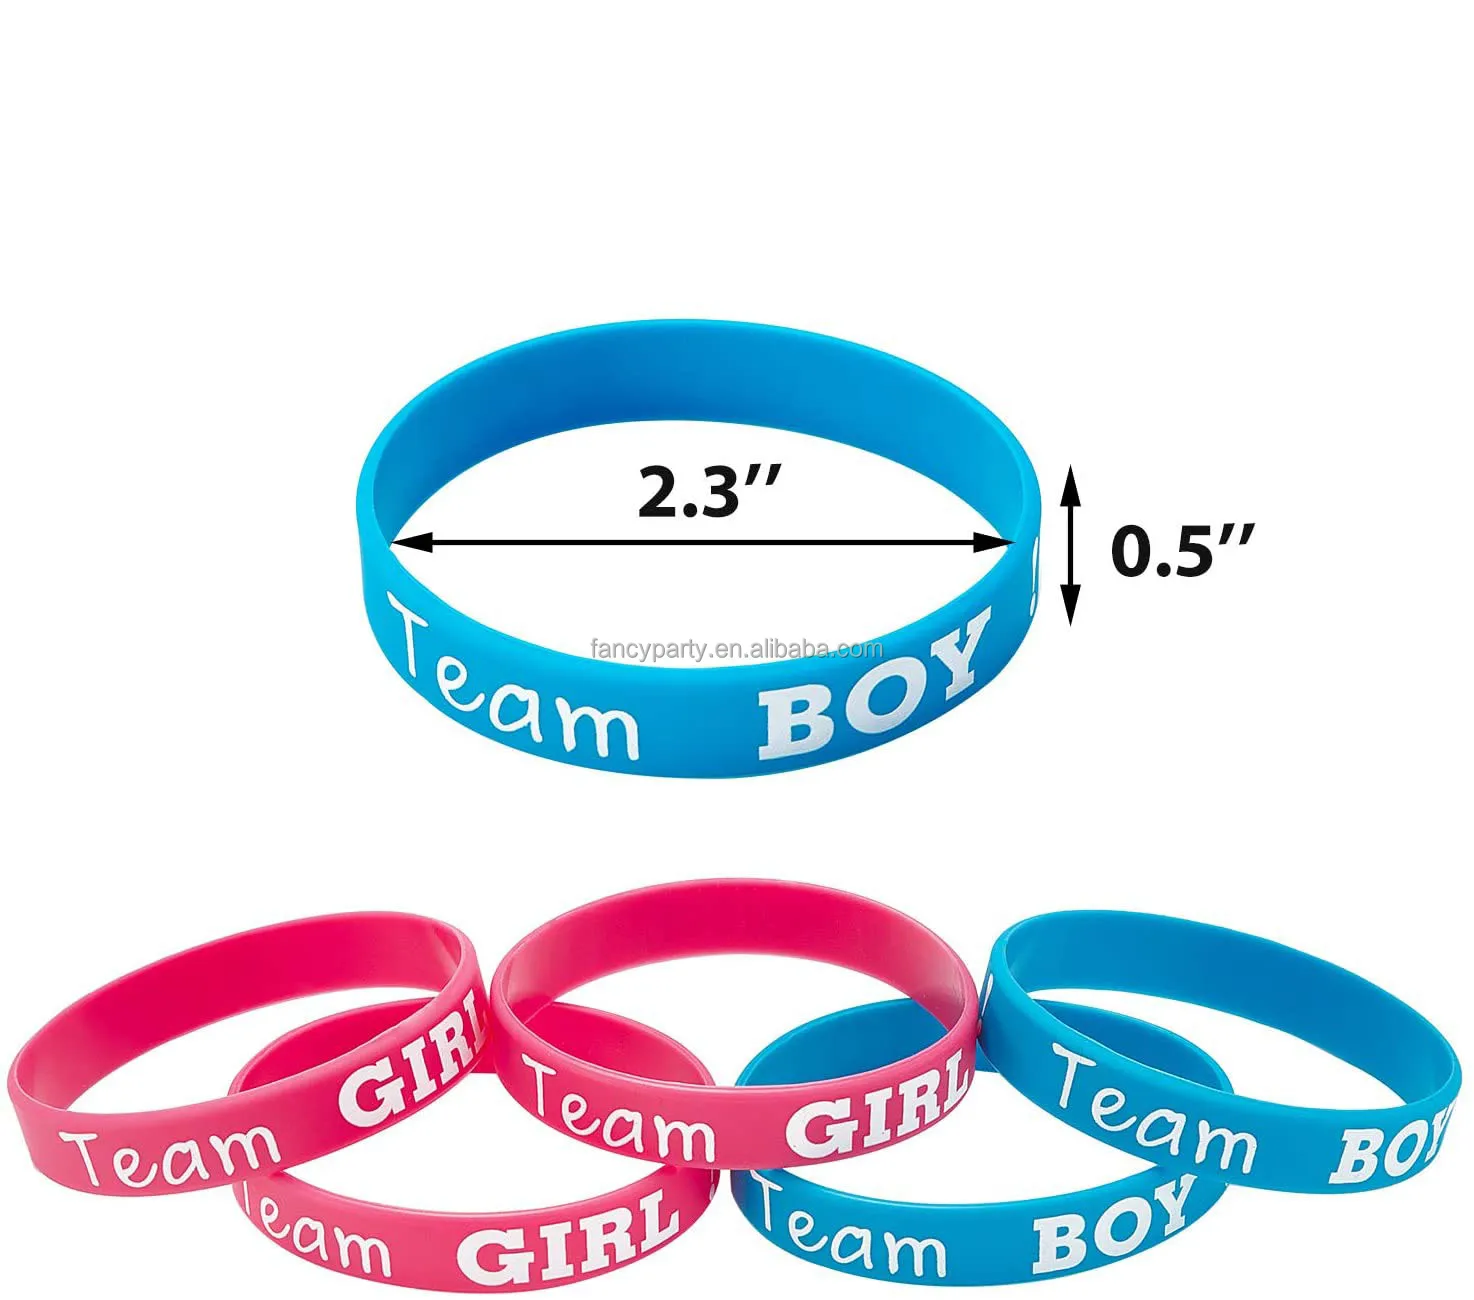 Details about   48 Pack Gender Reveal Bracelets Team Boy Team Girl Wristbands Baby Shower Party 